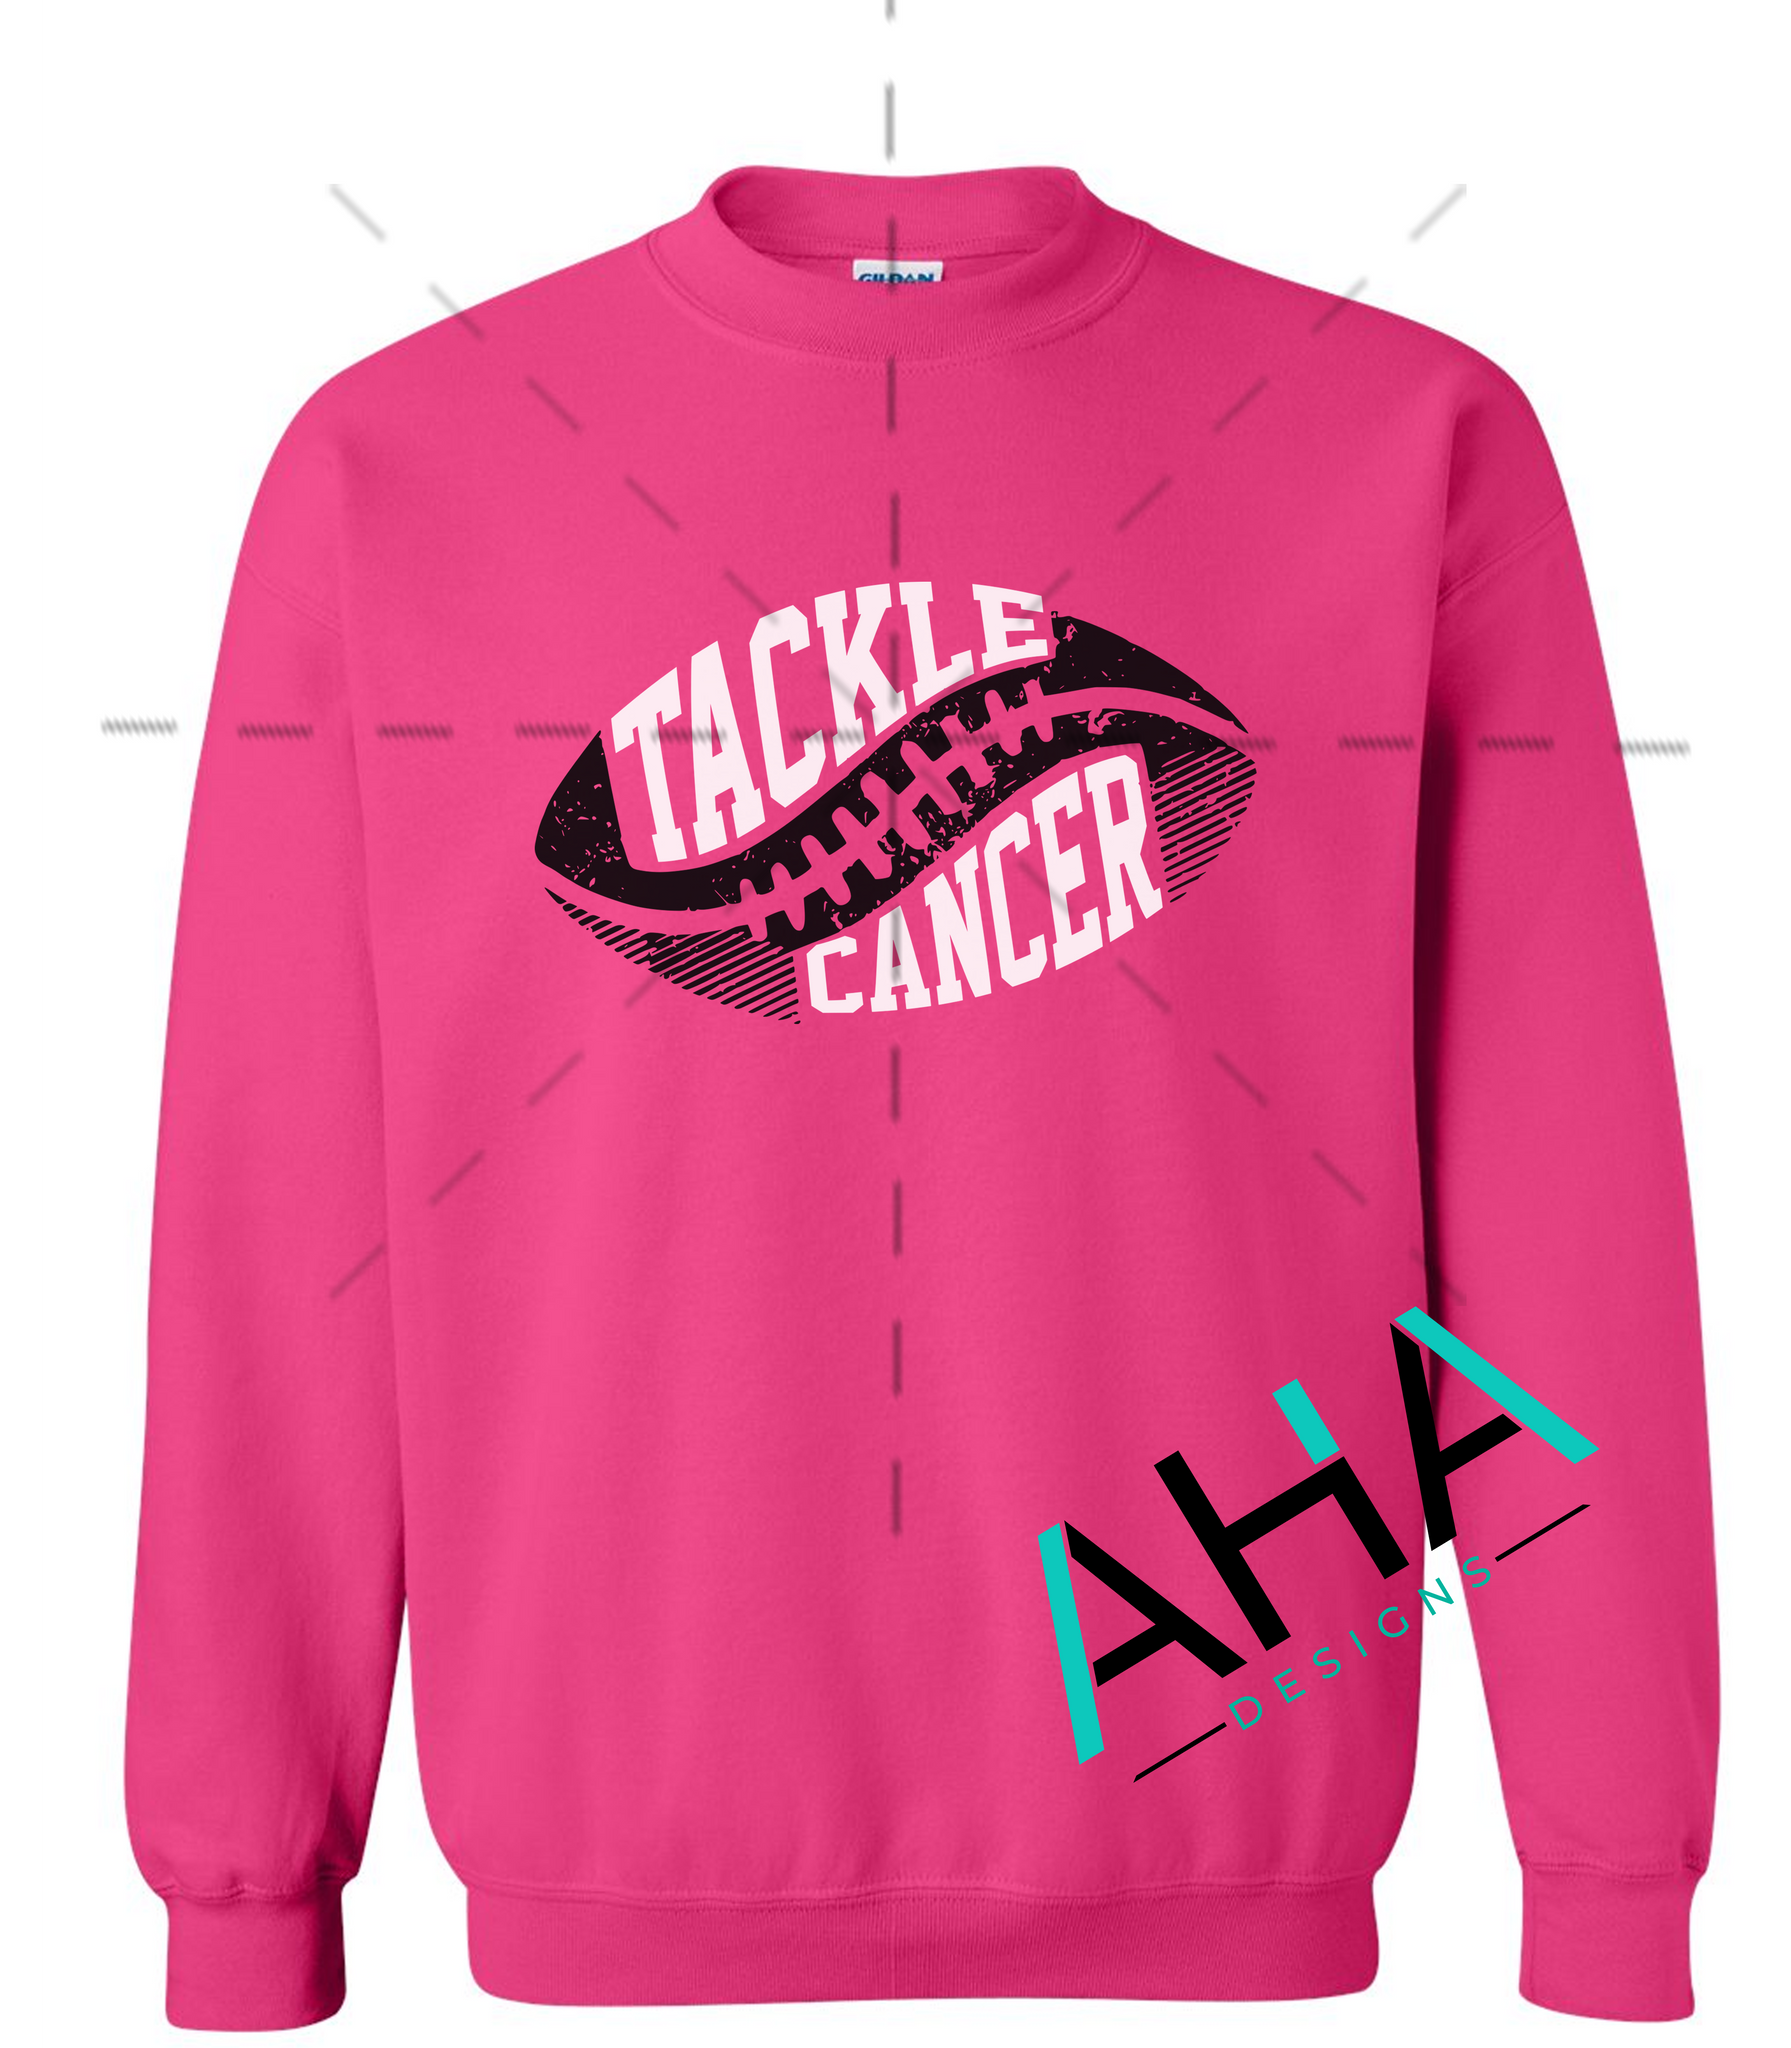 [PRE-ORDER] Pink Tackle Cancer Crew Sweatshirt